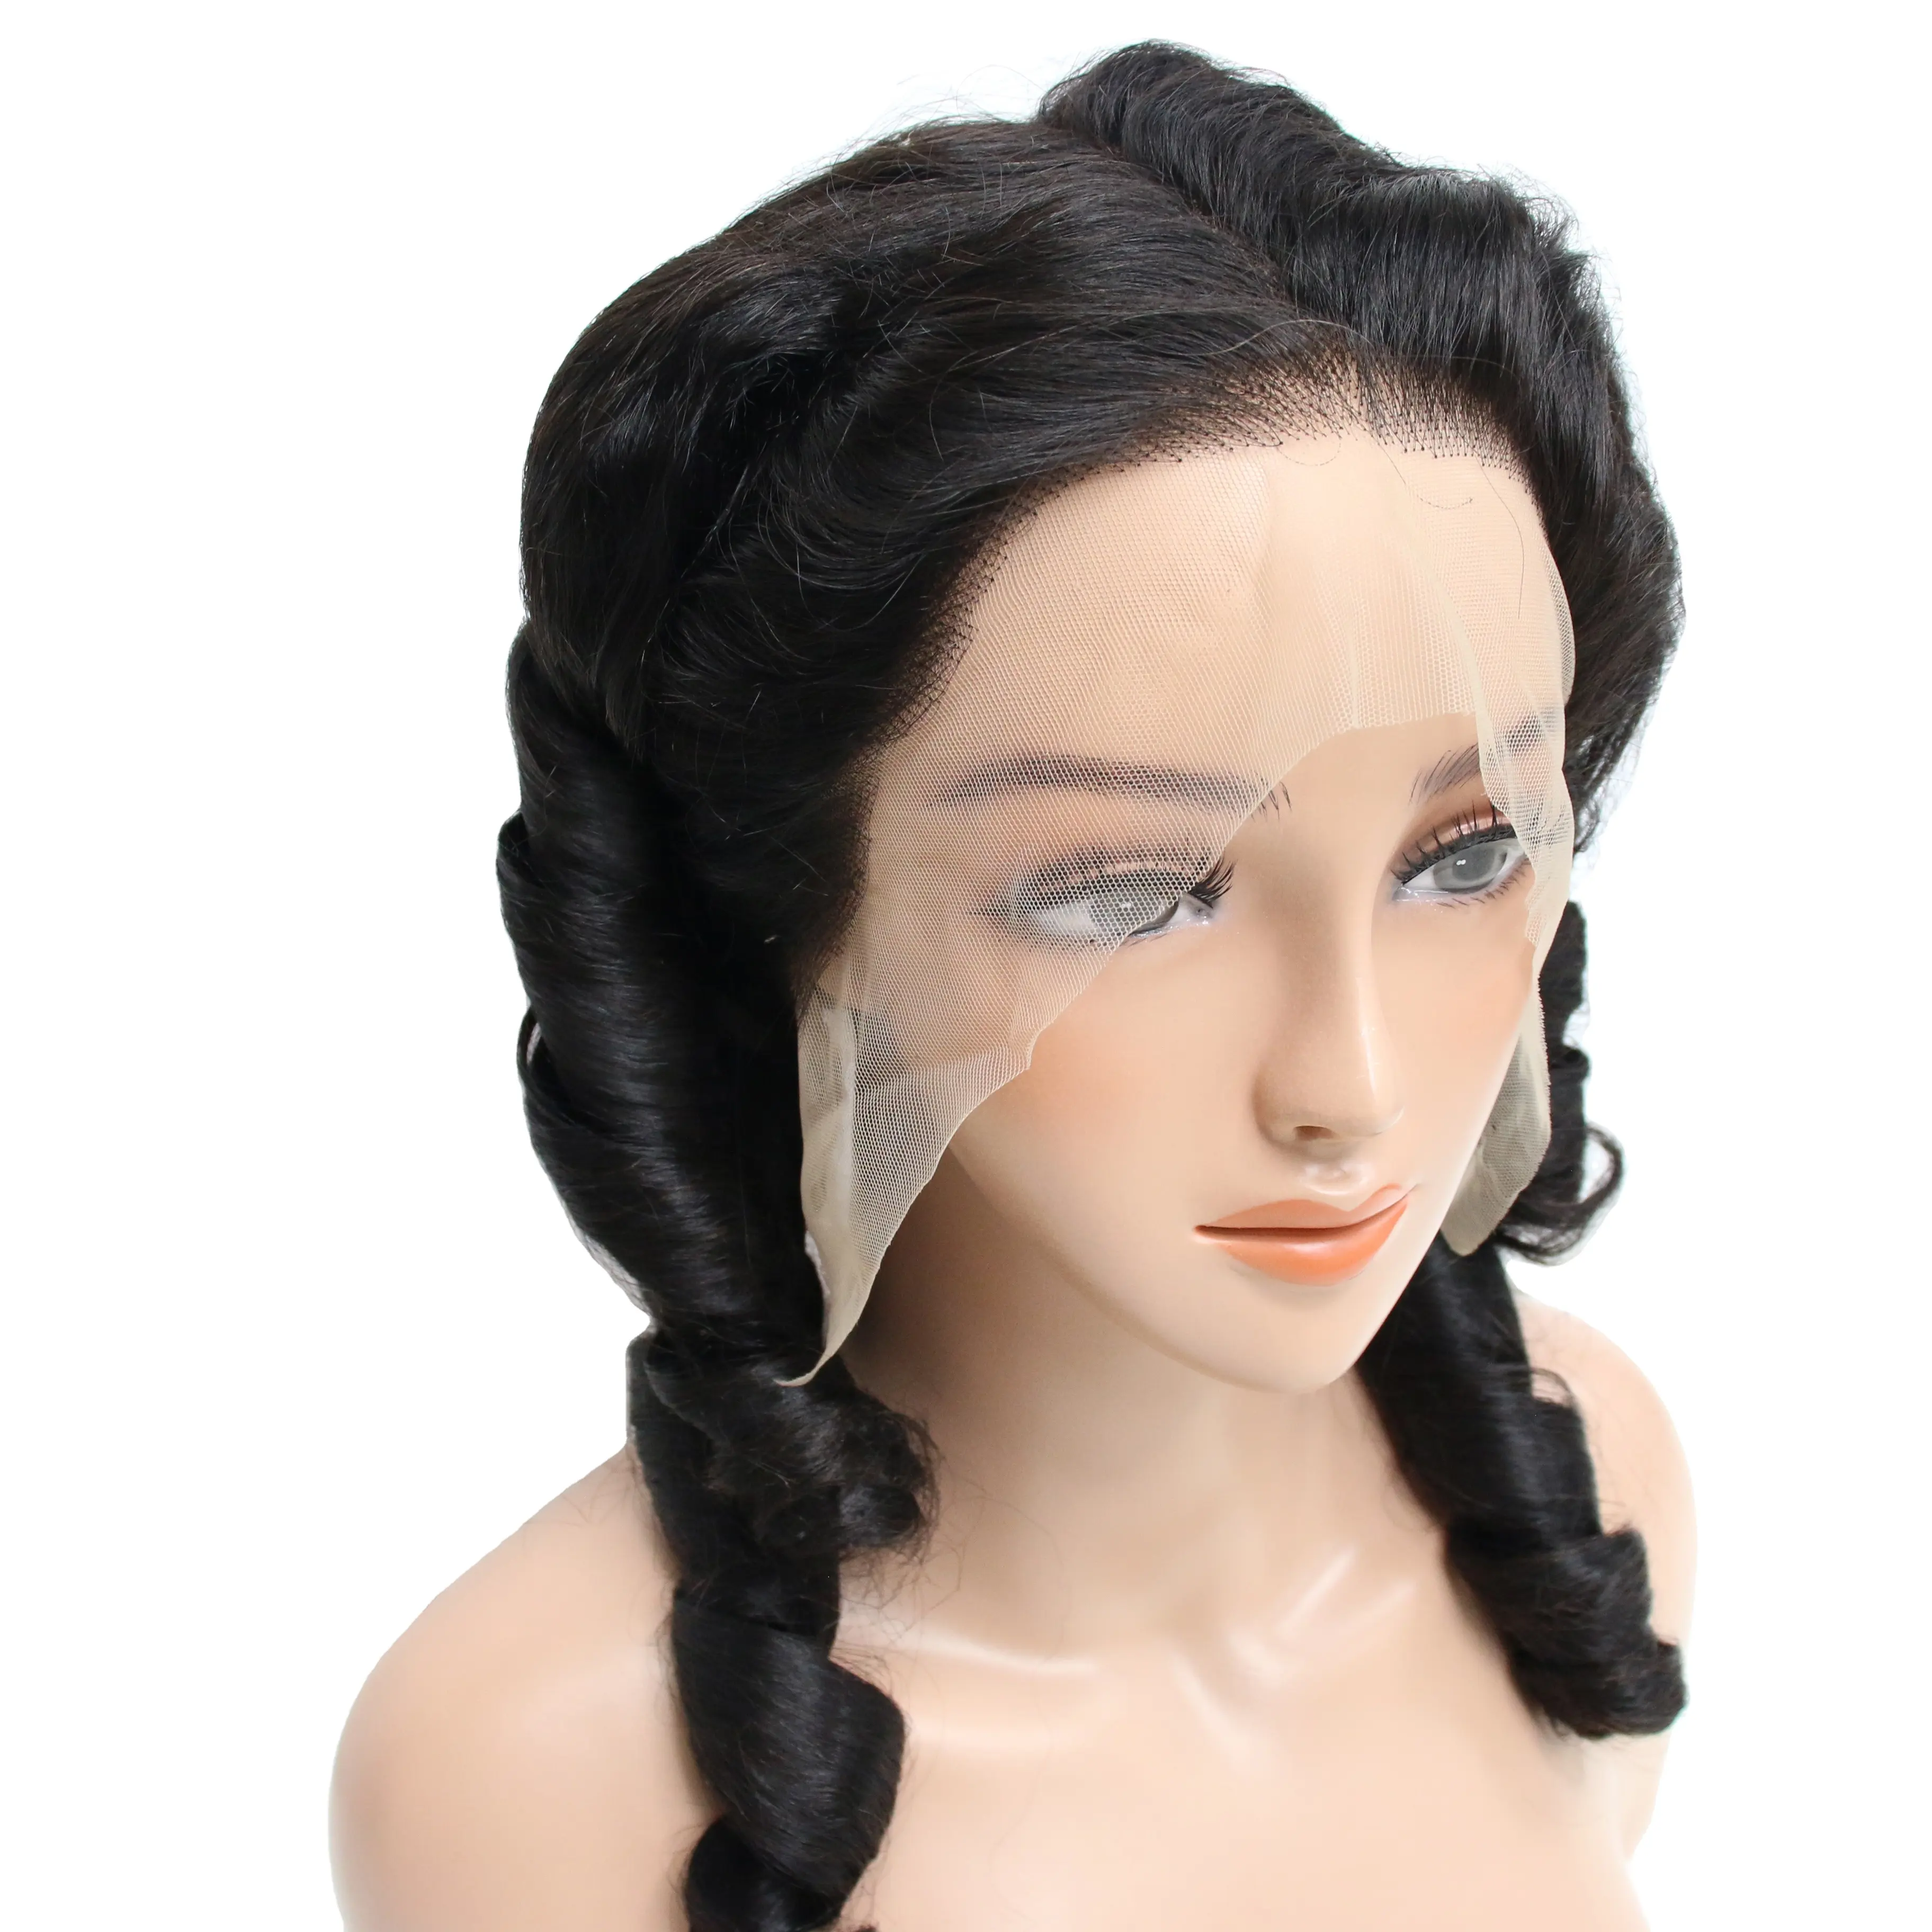 HD Lace frontal wigs hair NATURAL WAVY human hair natural black #1B for wholesale brazilian virgin hair HD lace